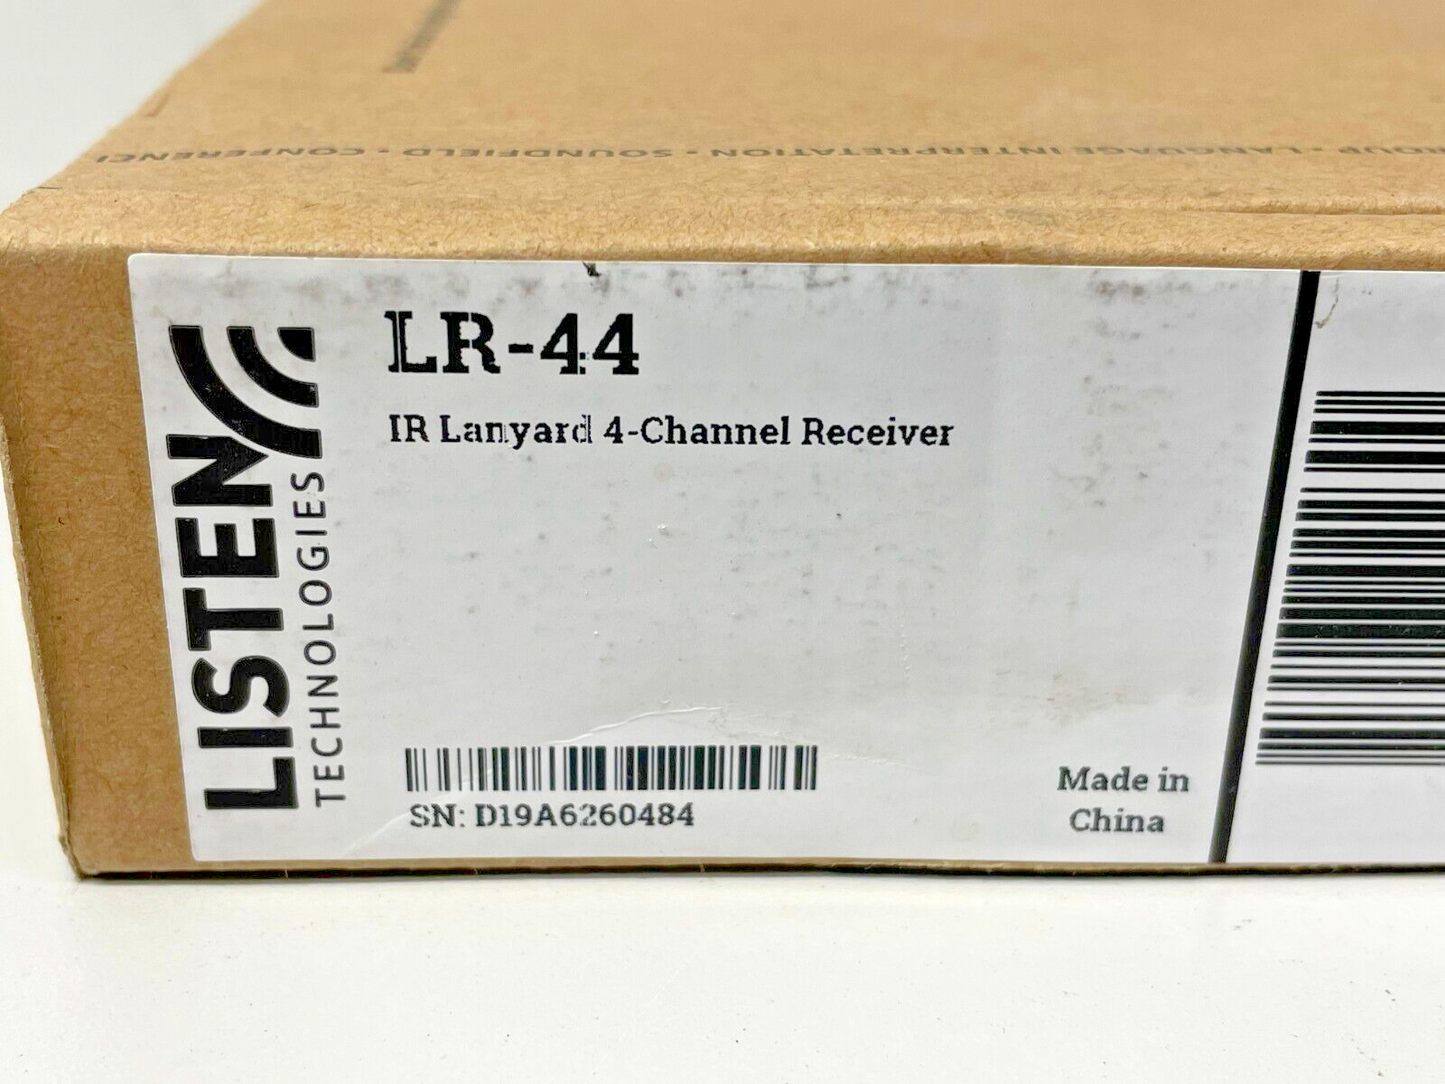 Listen Technologies LR-44 Lanyard-Style IR 4-Channel Receiver